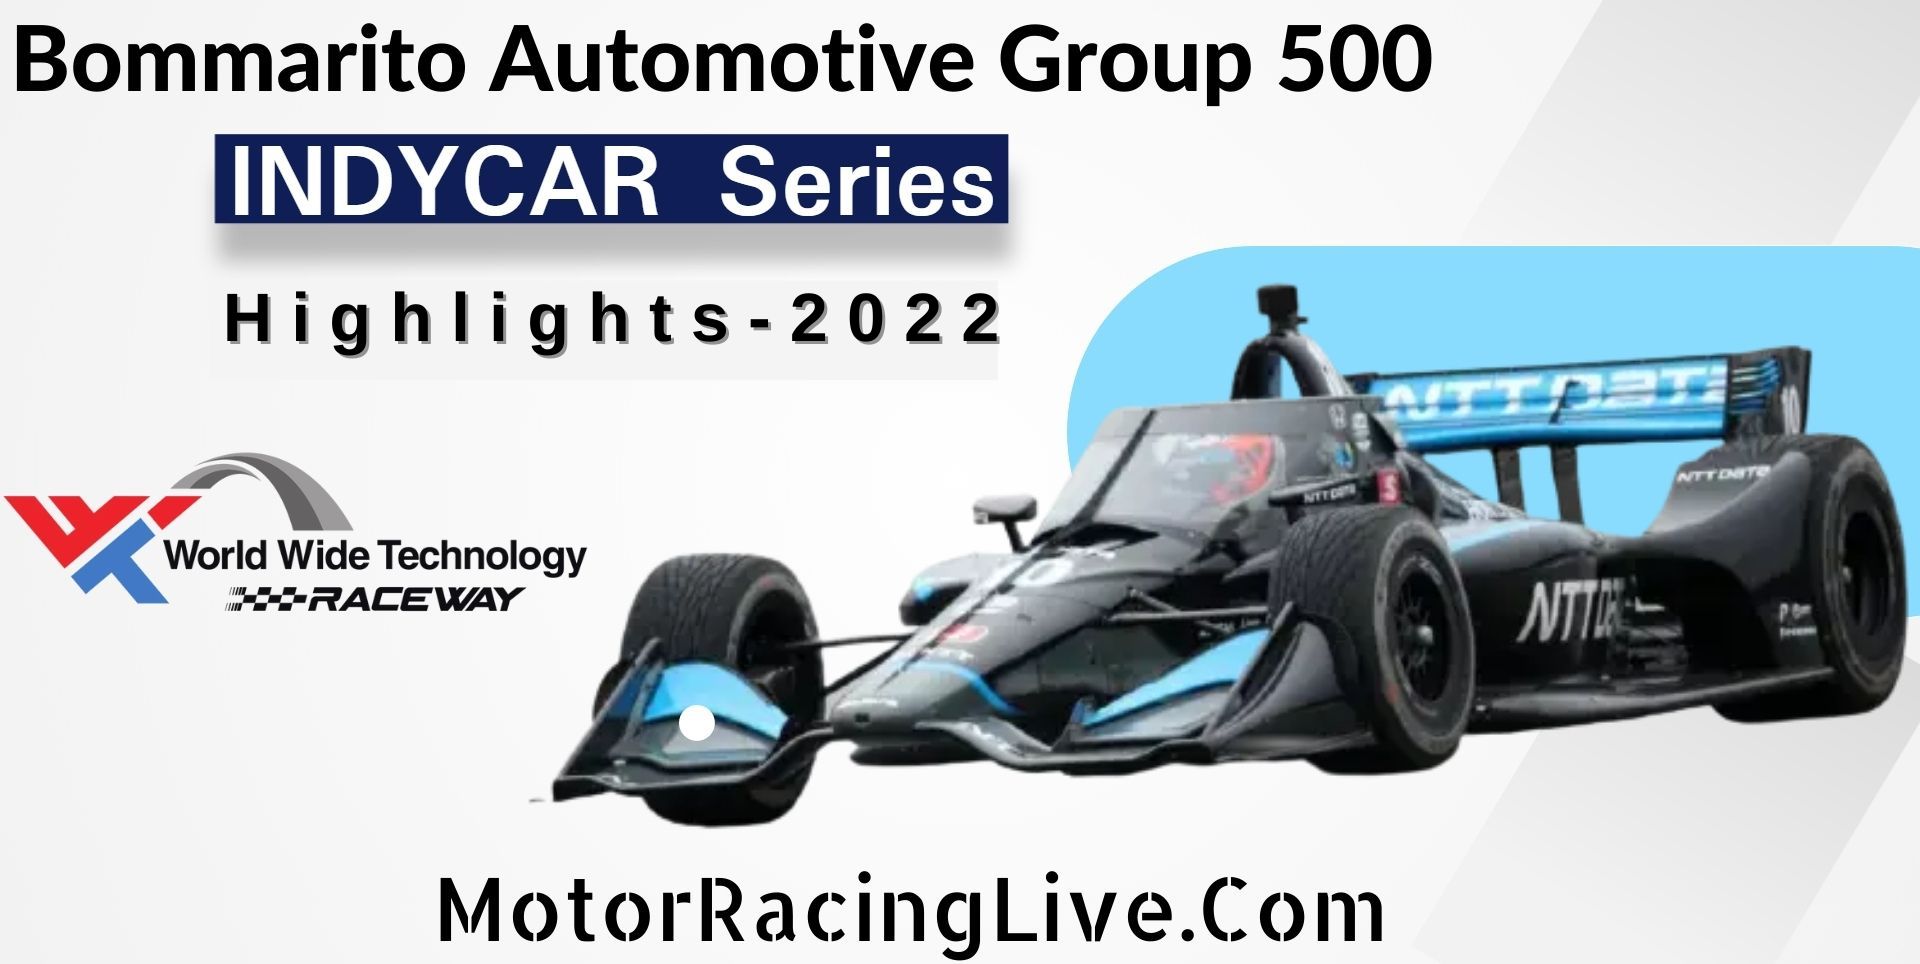 Bommarito Automotive Group 500 Highlights 2022 | INDYCAR